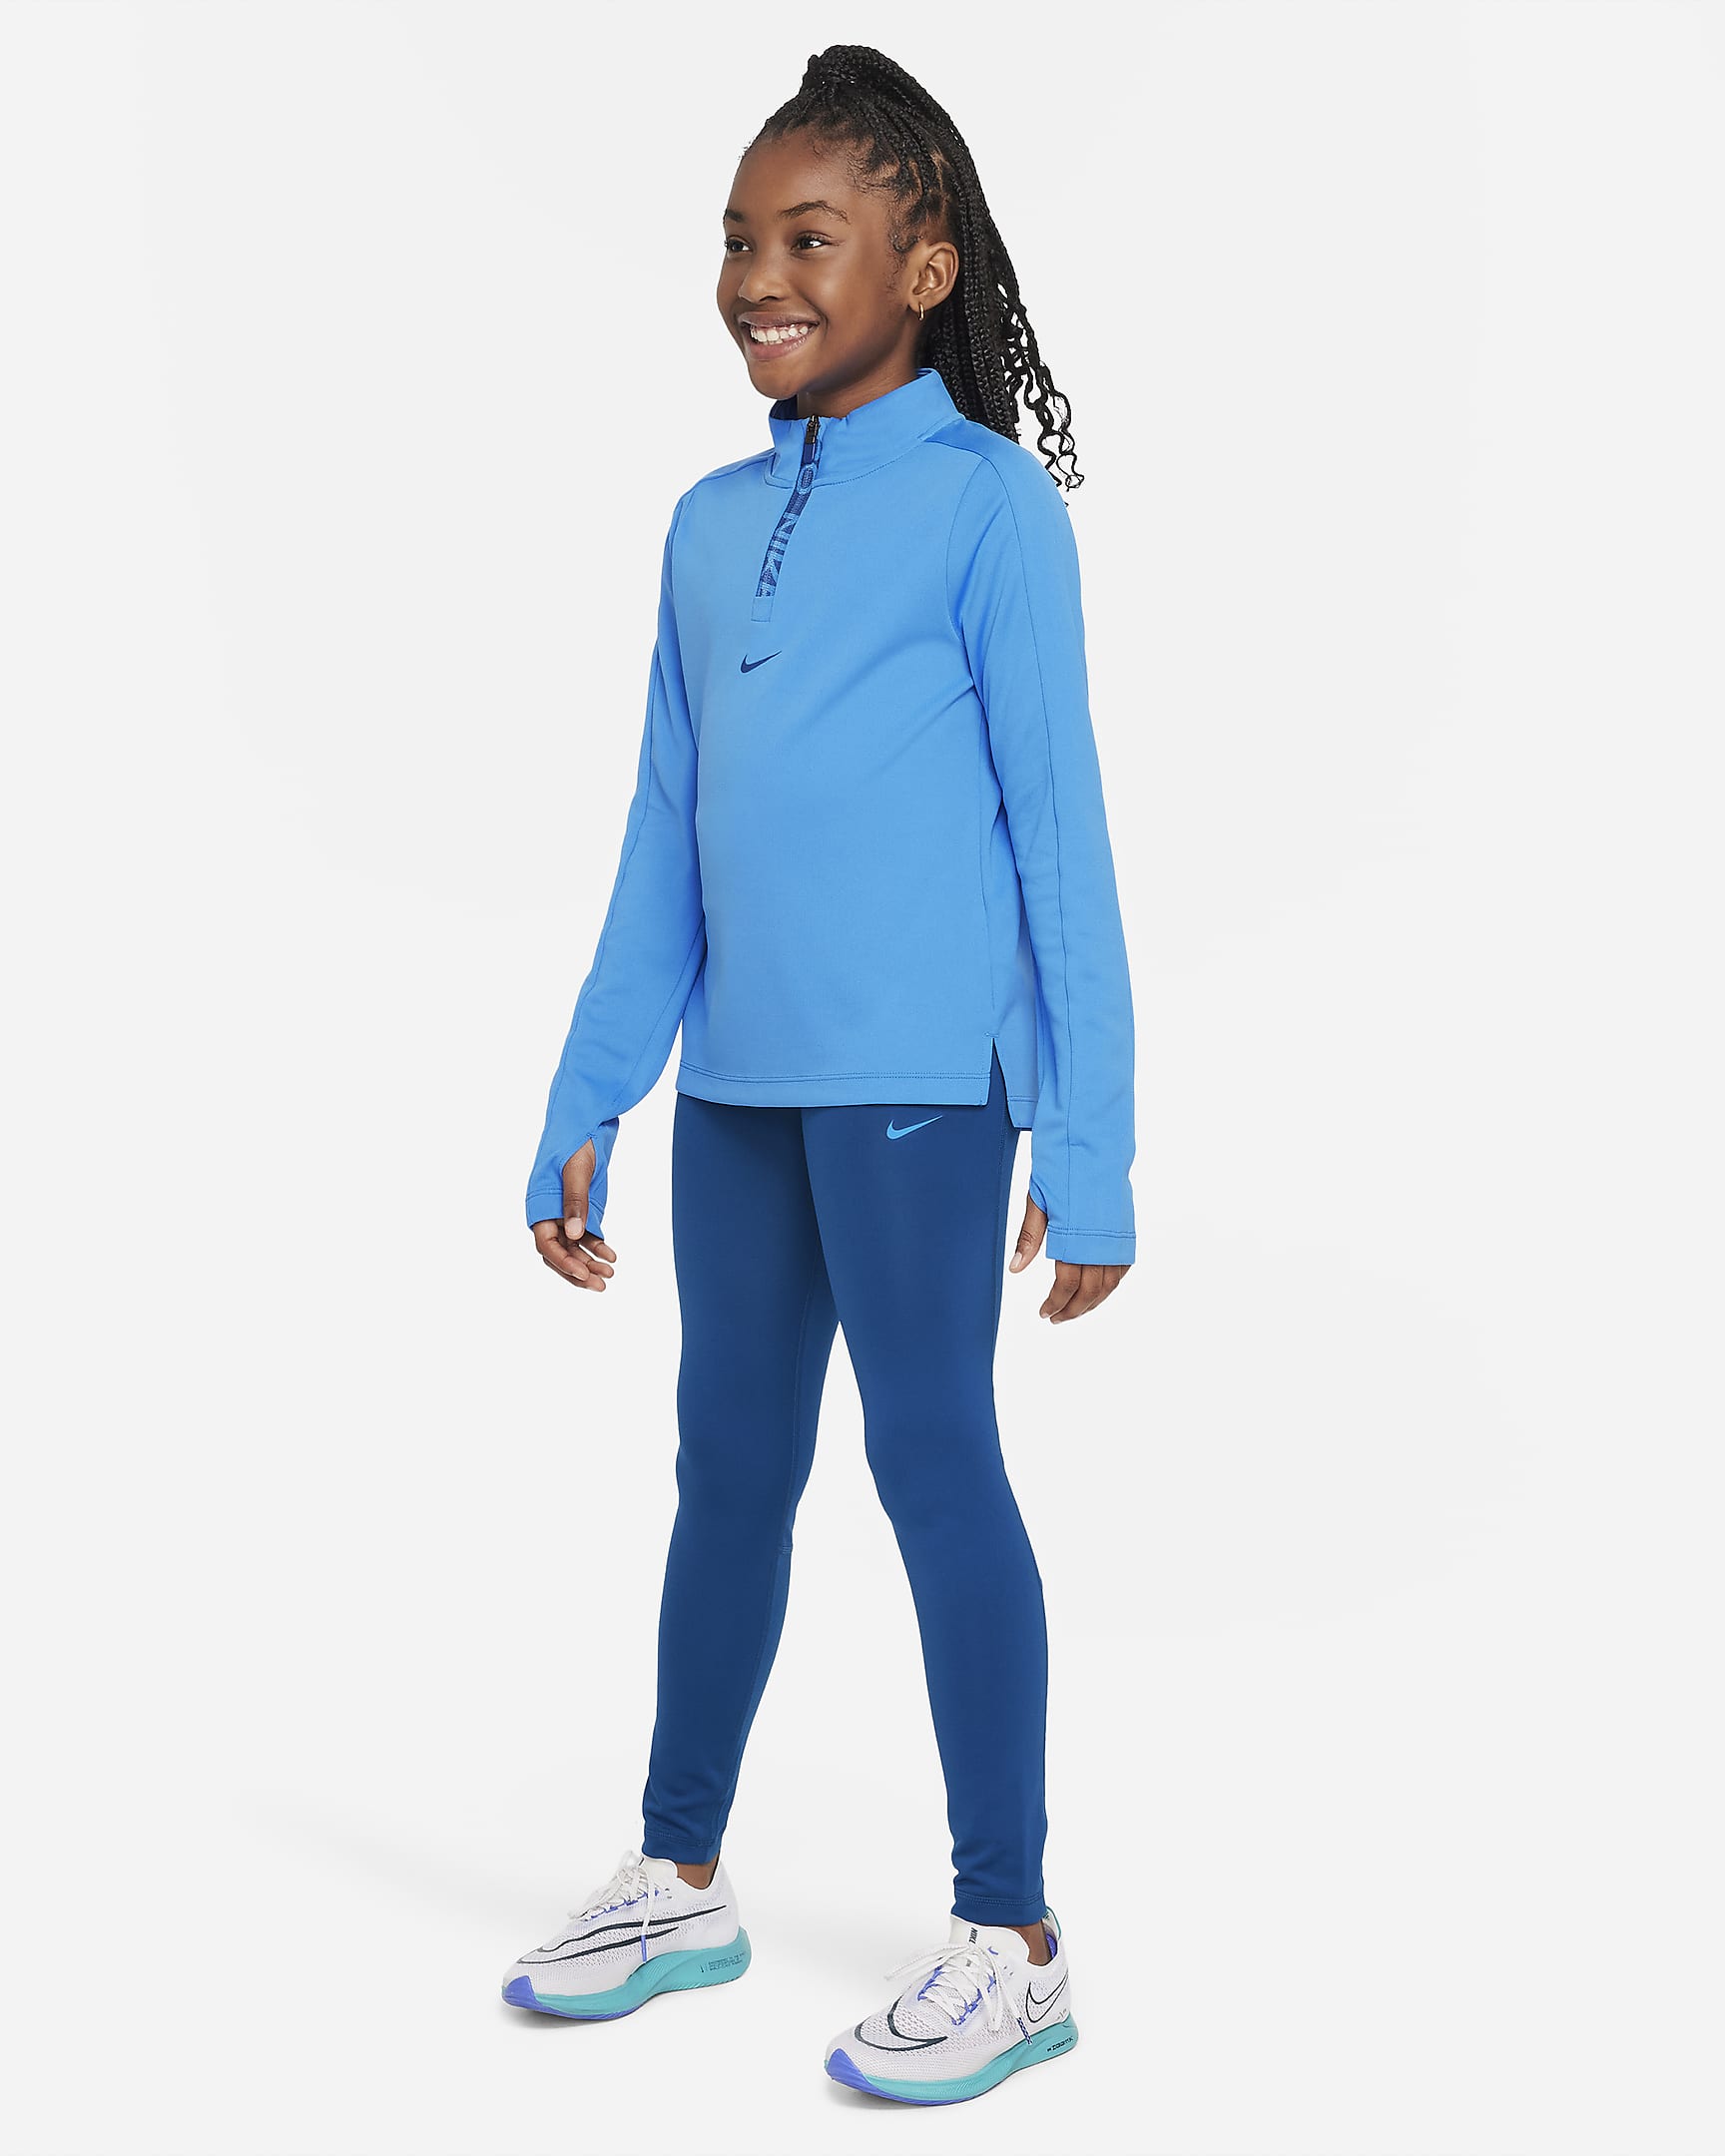 Nike Pro Girls' Dri-FIT Long-Sleeve 1/2-Zip Top. Nike RO